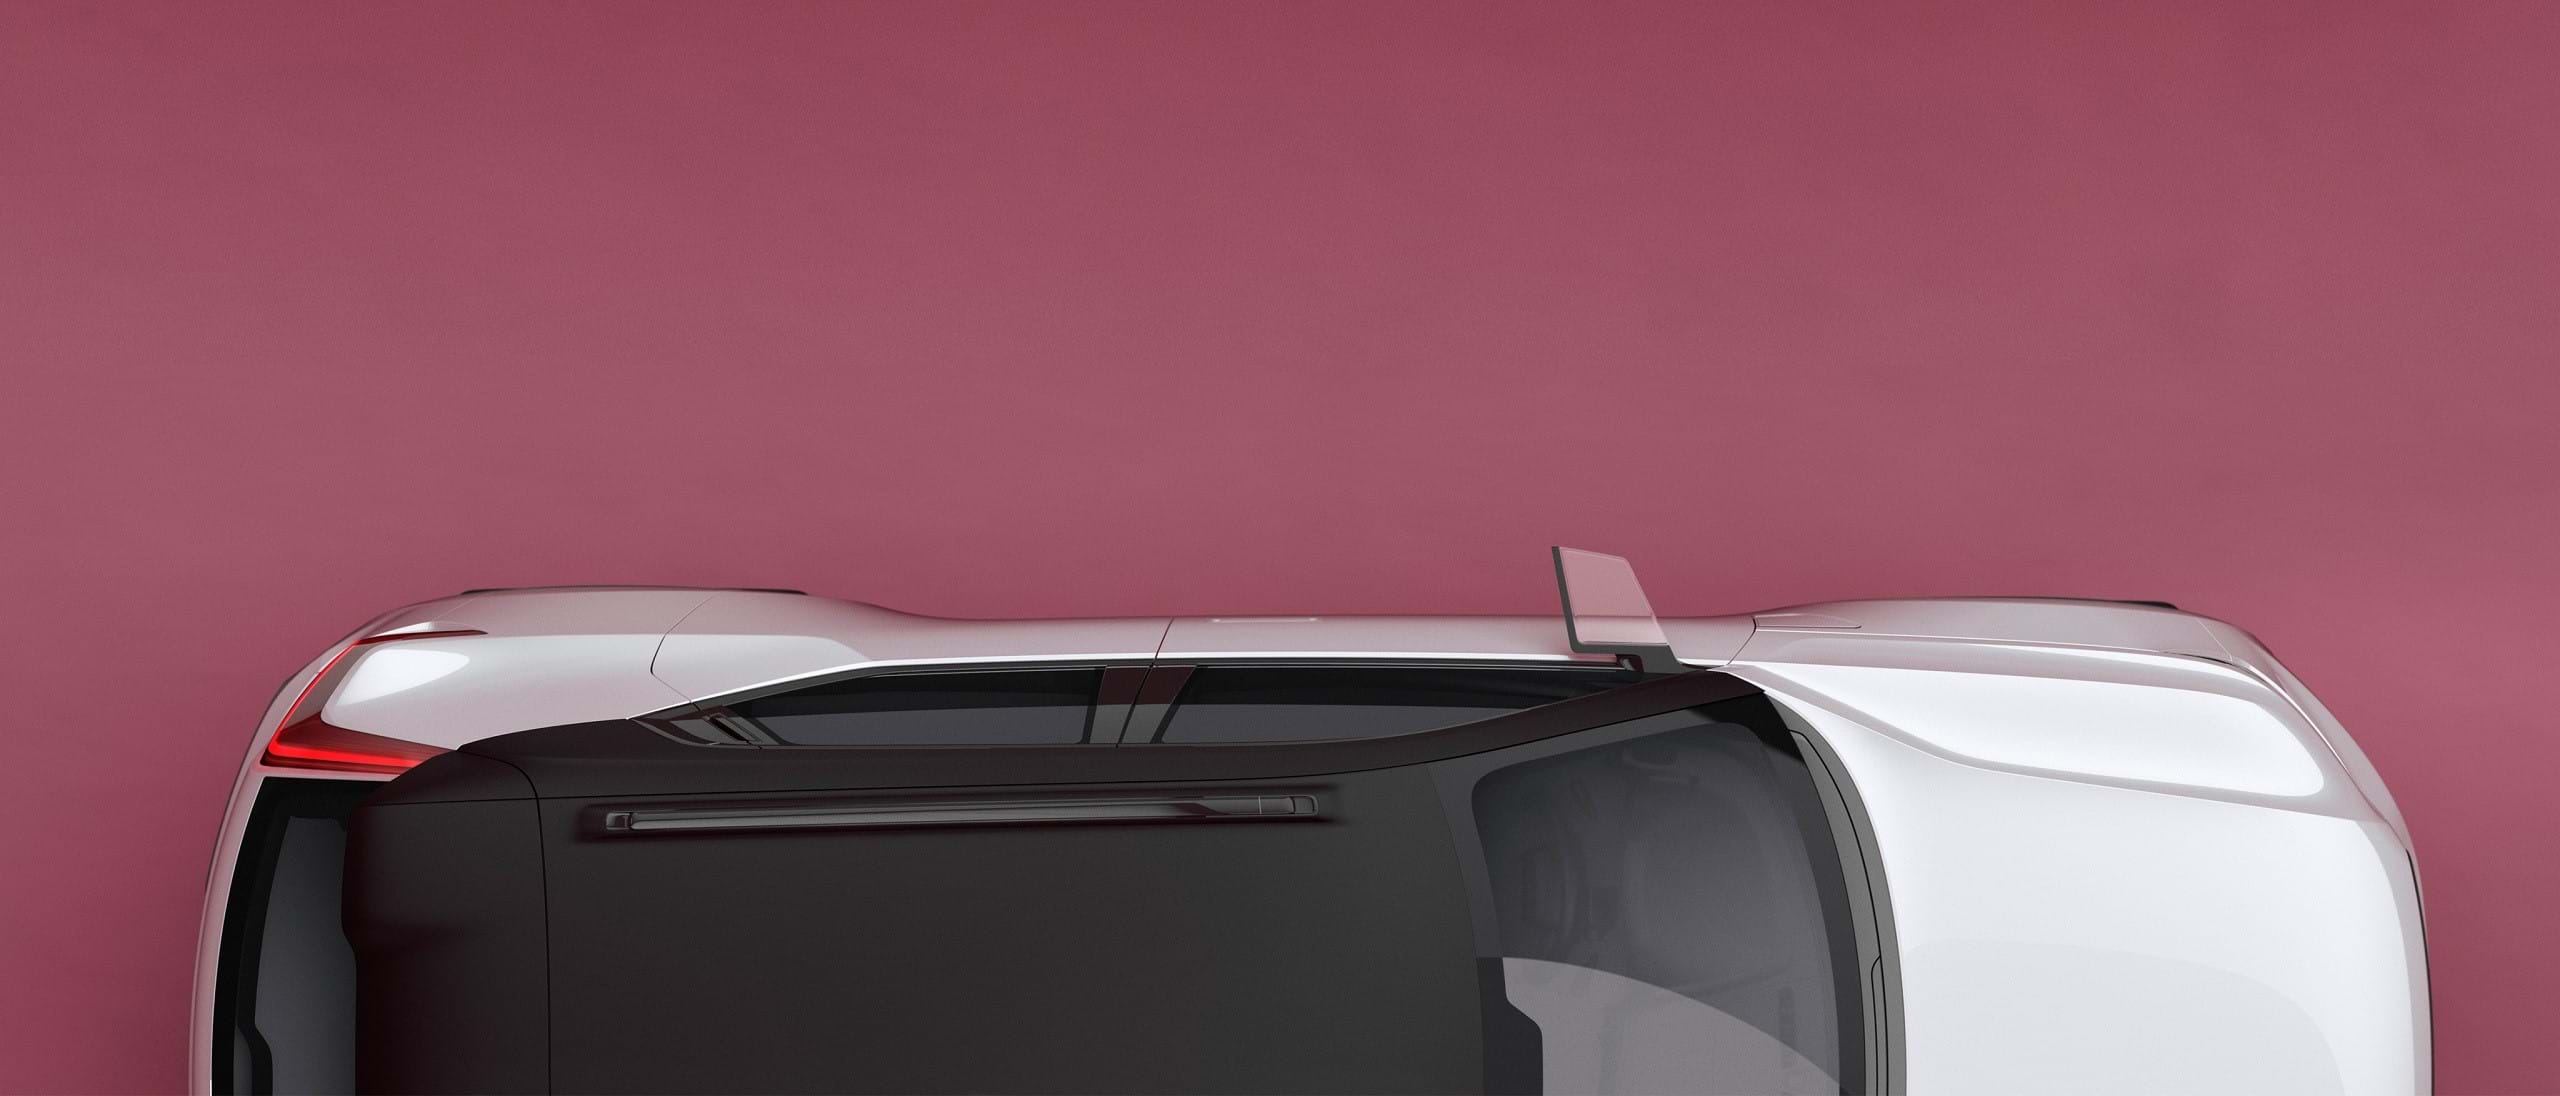 Volvo Concept 40 branco com teto de contraste preto visto de cima